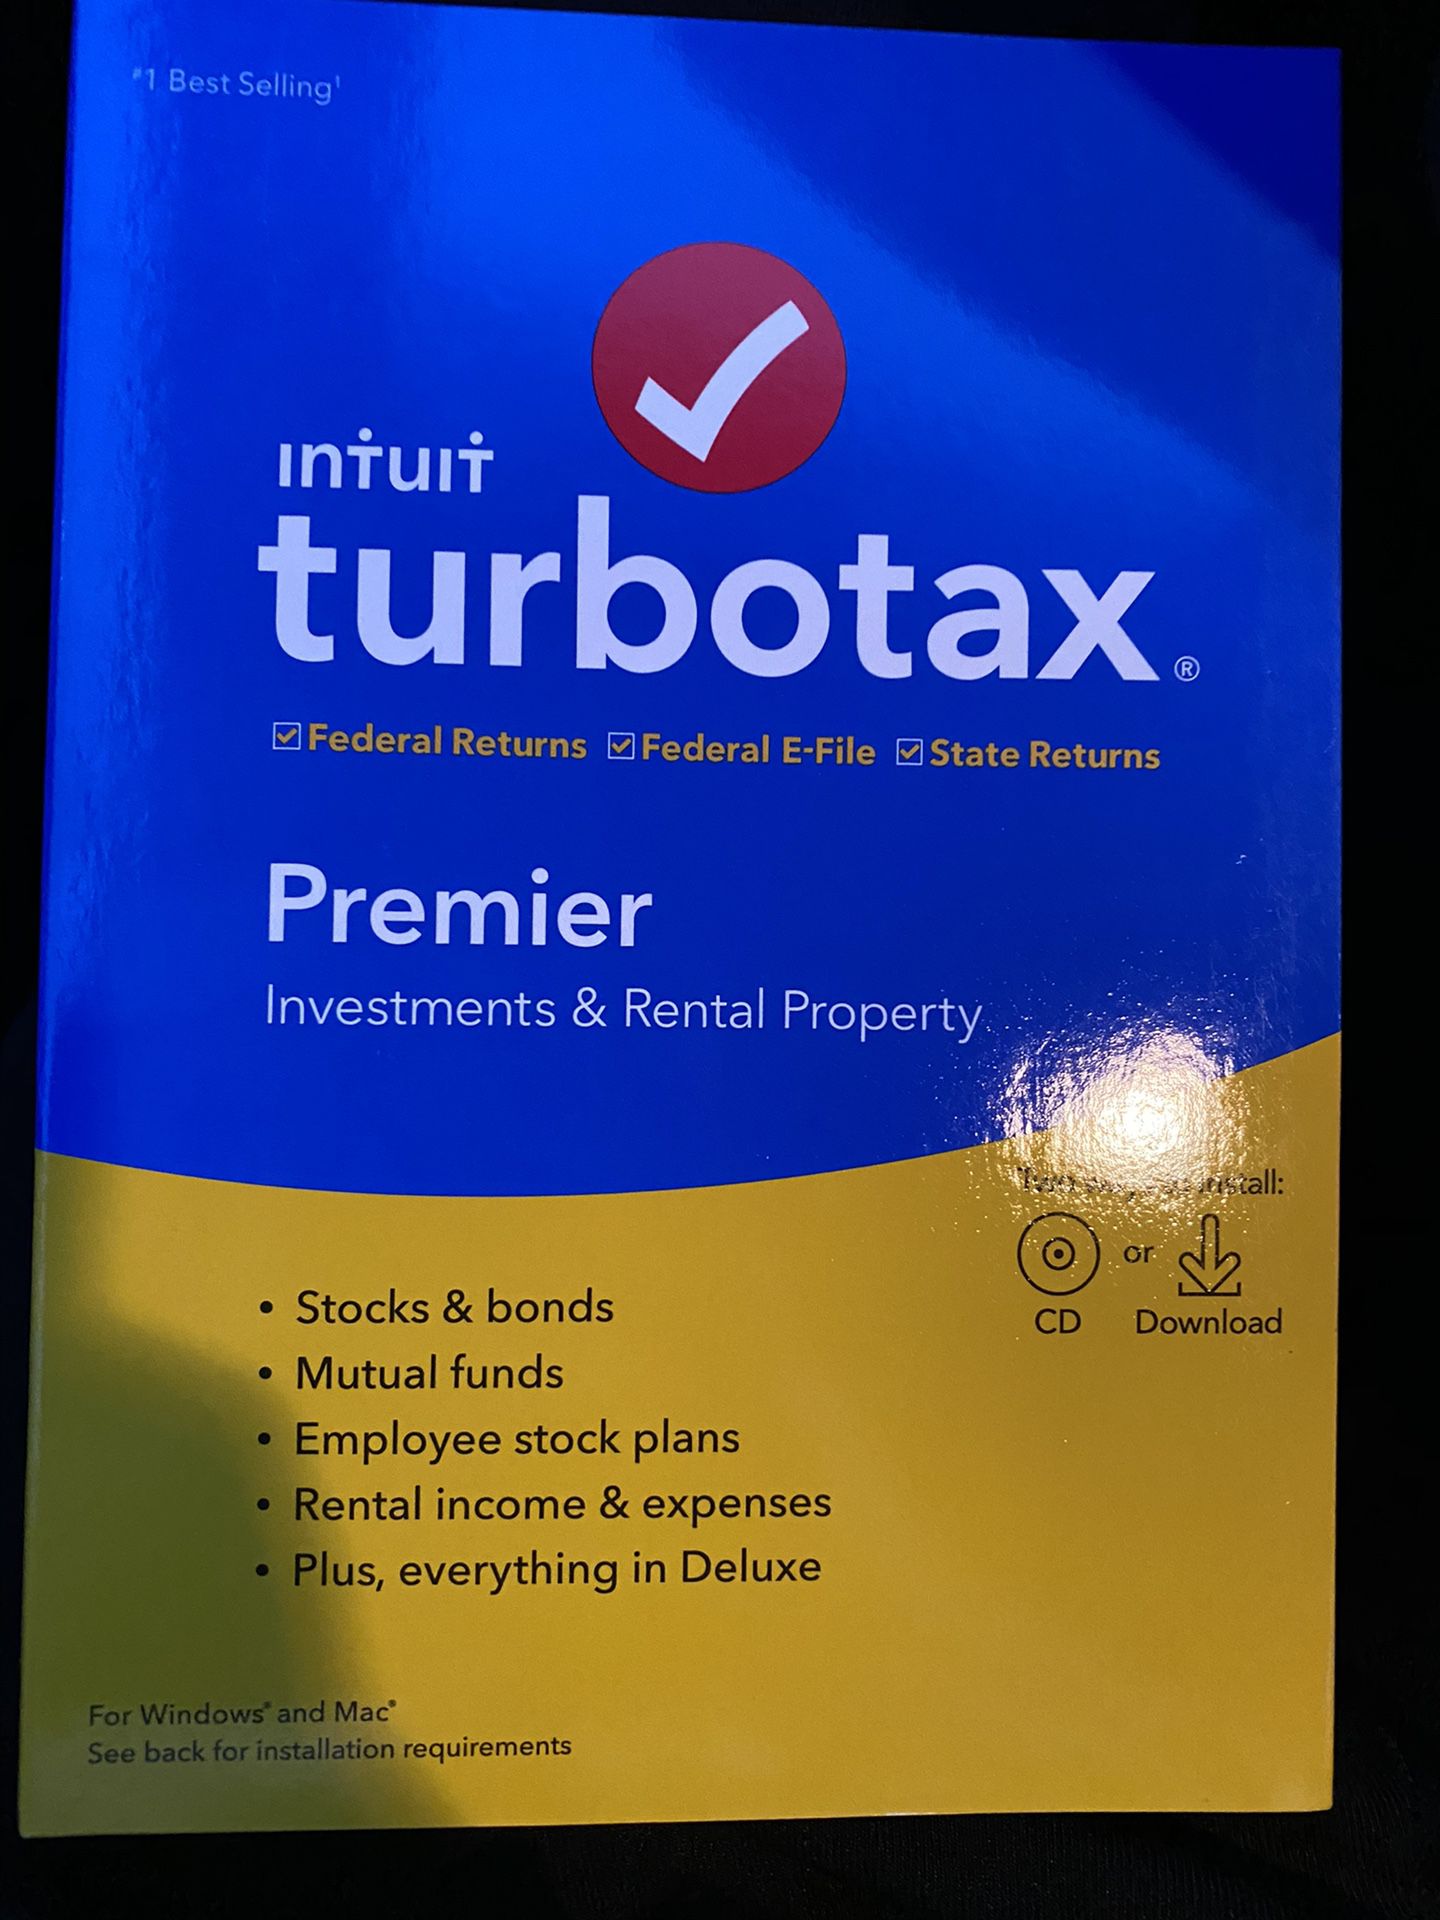 TurboTax premier